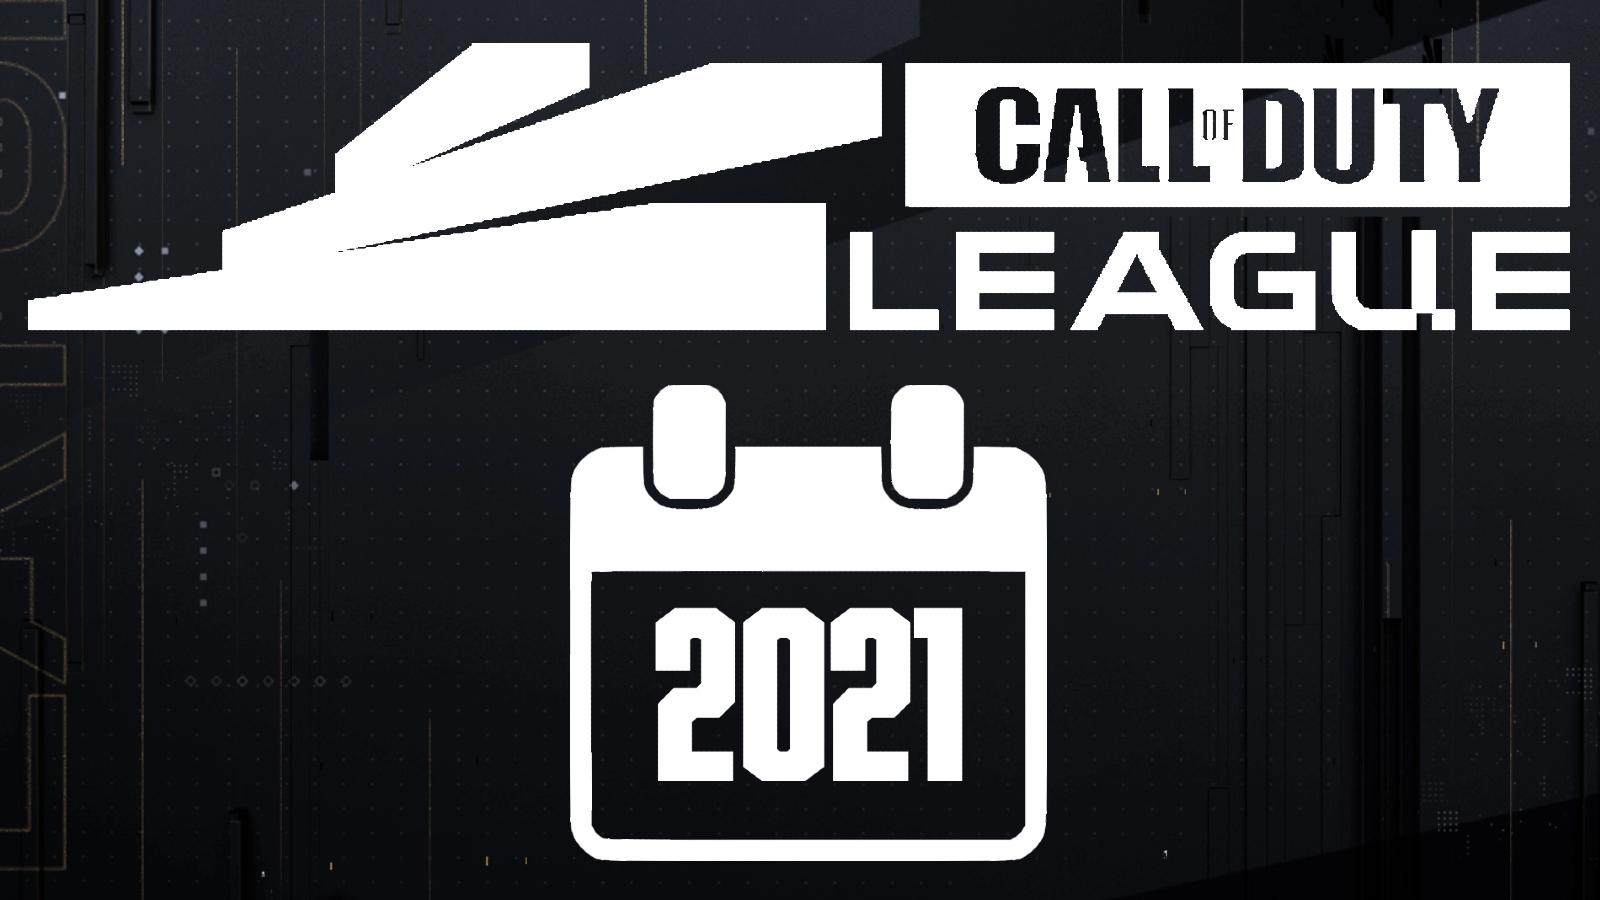 call of duty league 2021 dates announced